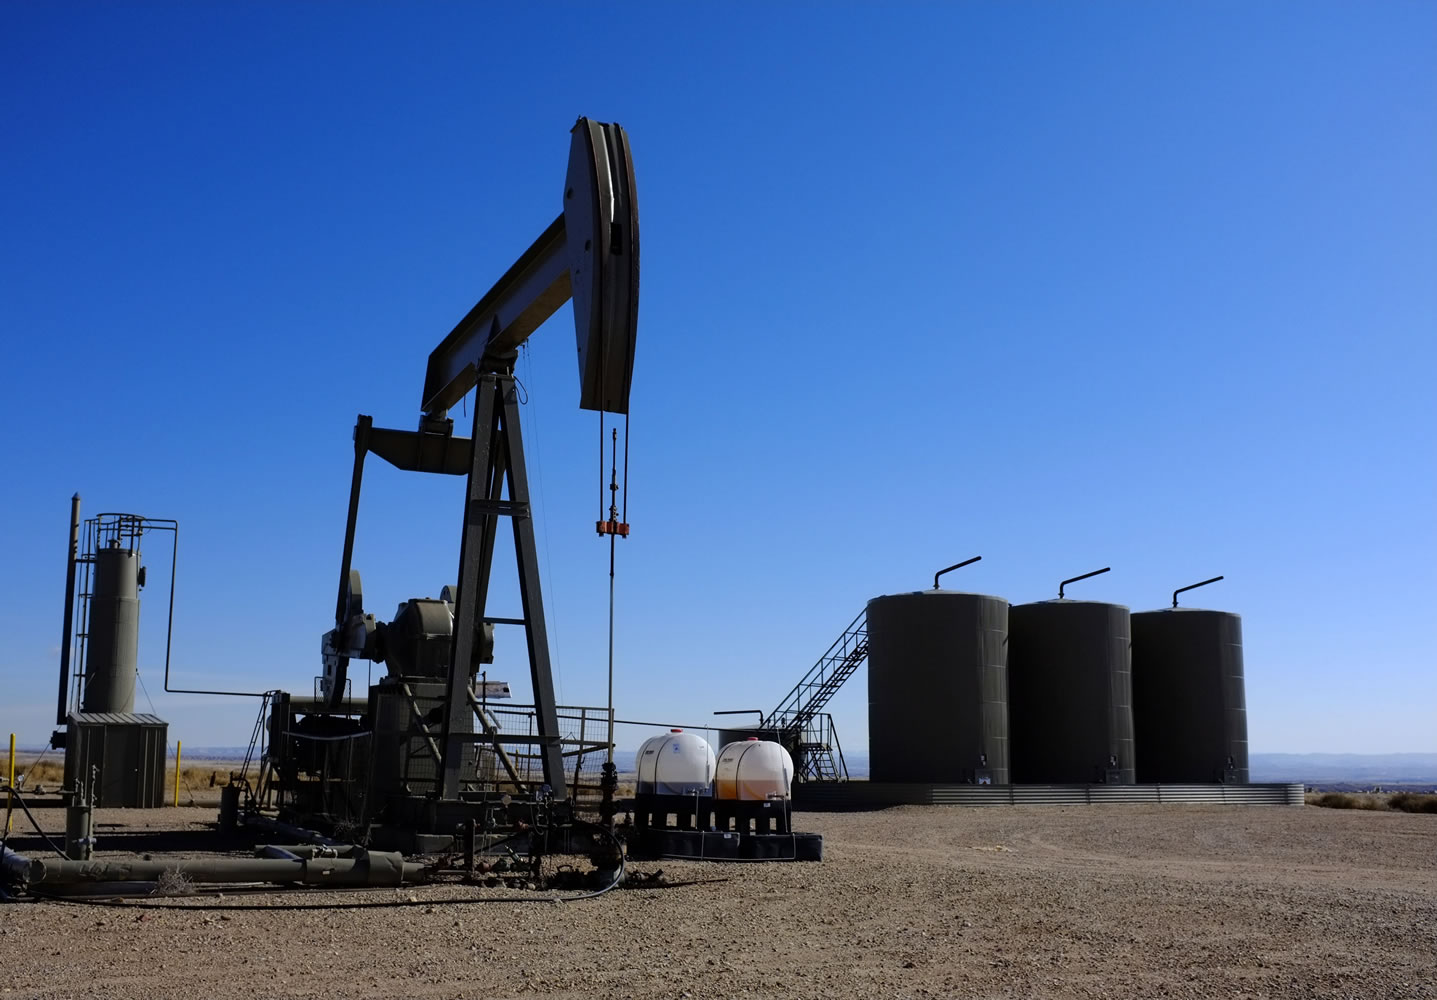 Equipment in the oil fields of the Uintah Basin, southeast of Vernal, Utah.